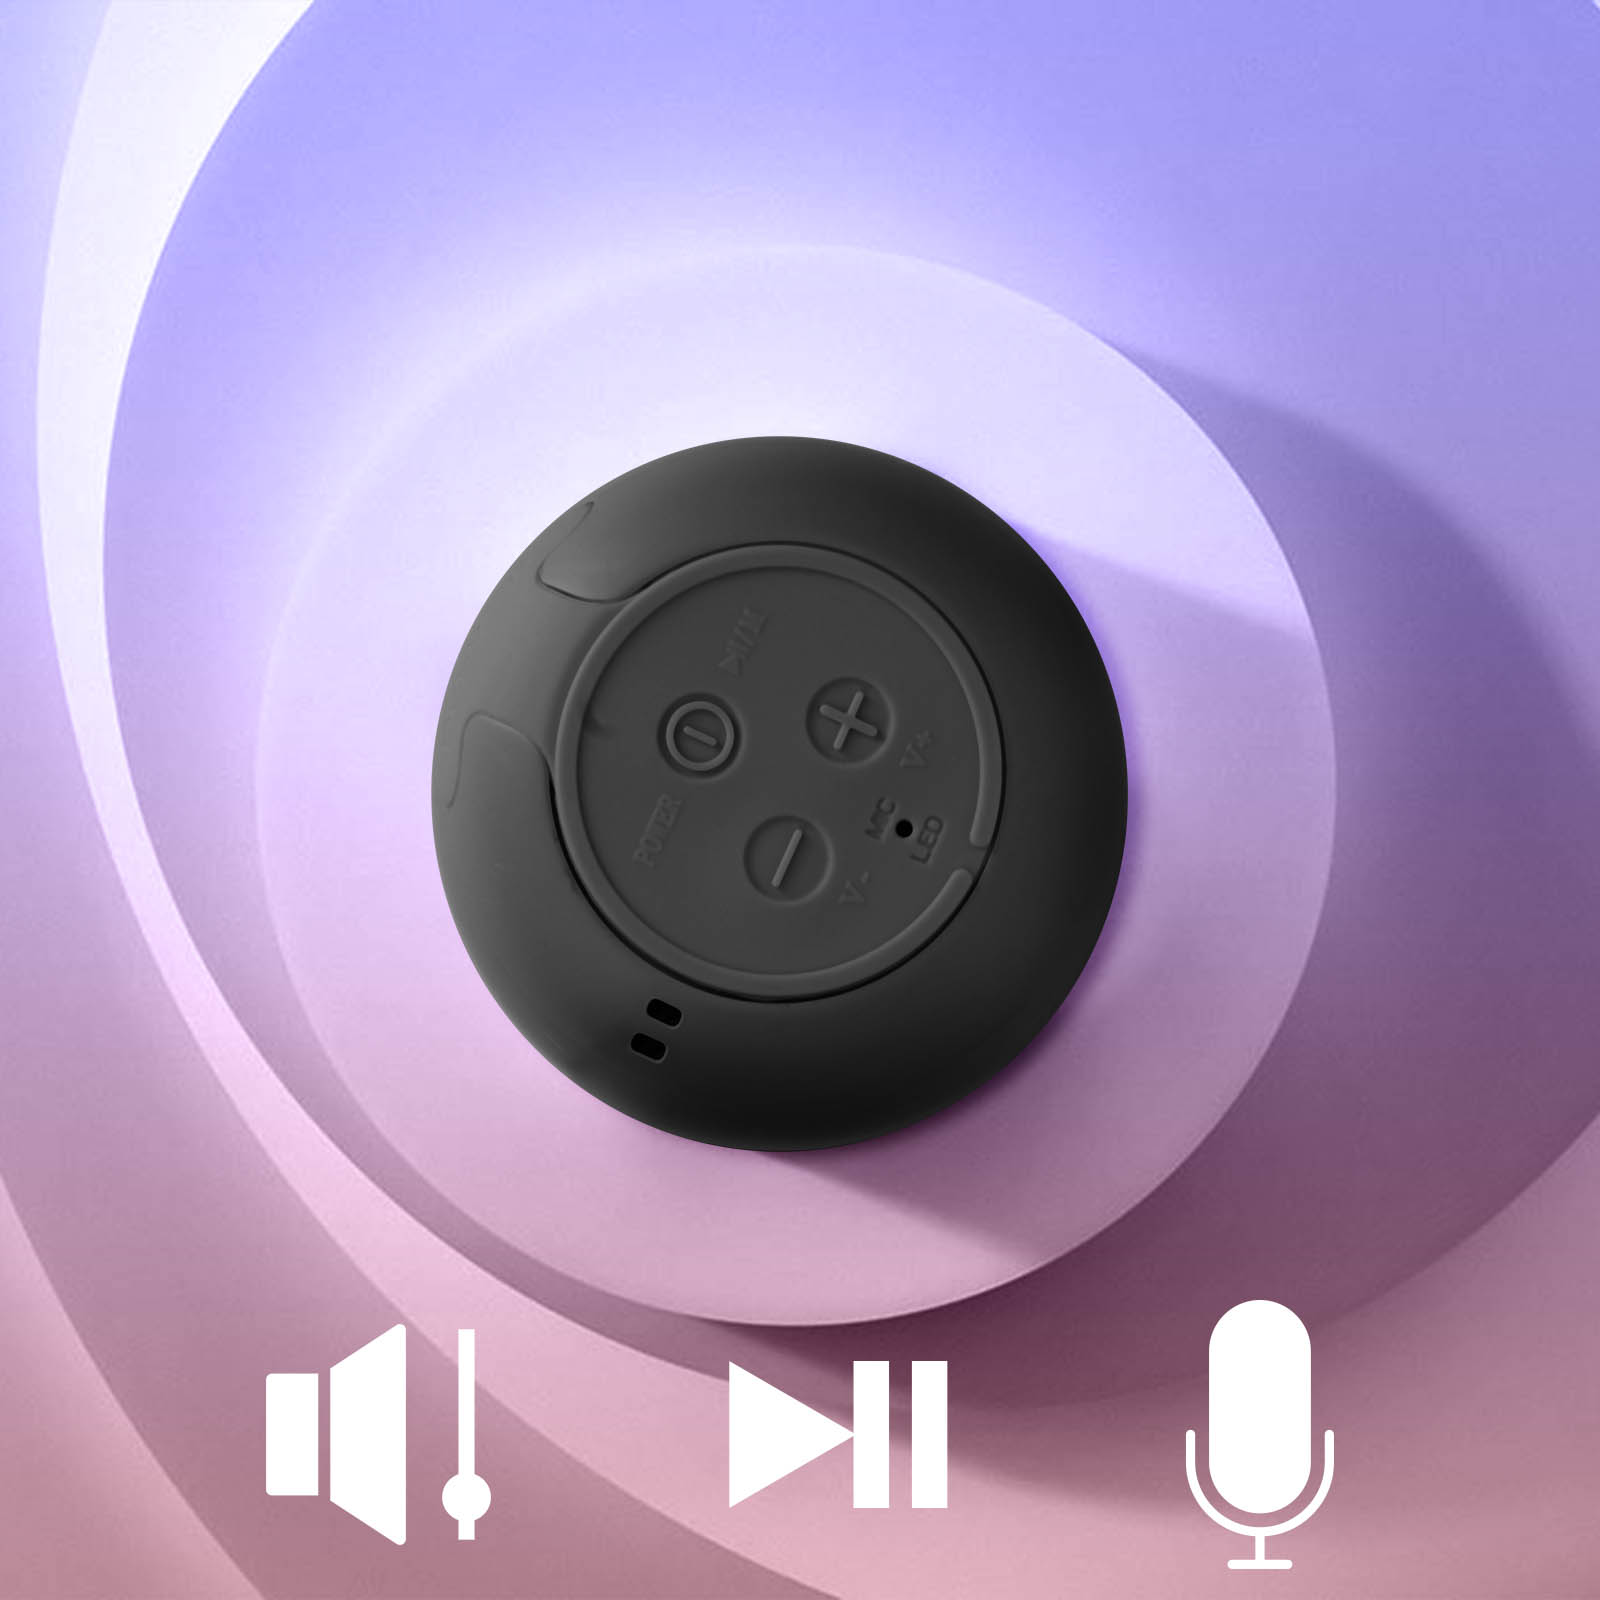 Avizar Mini Enceinte Bluetooth Radio FM et Slot Micro-SD Portable